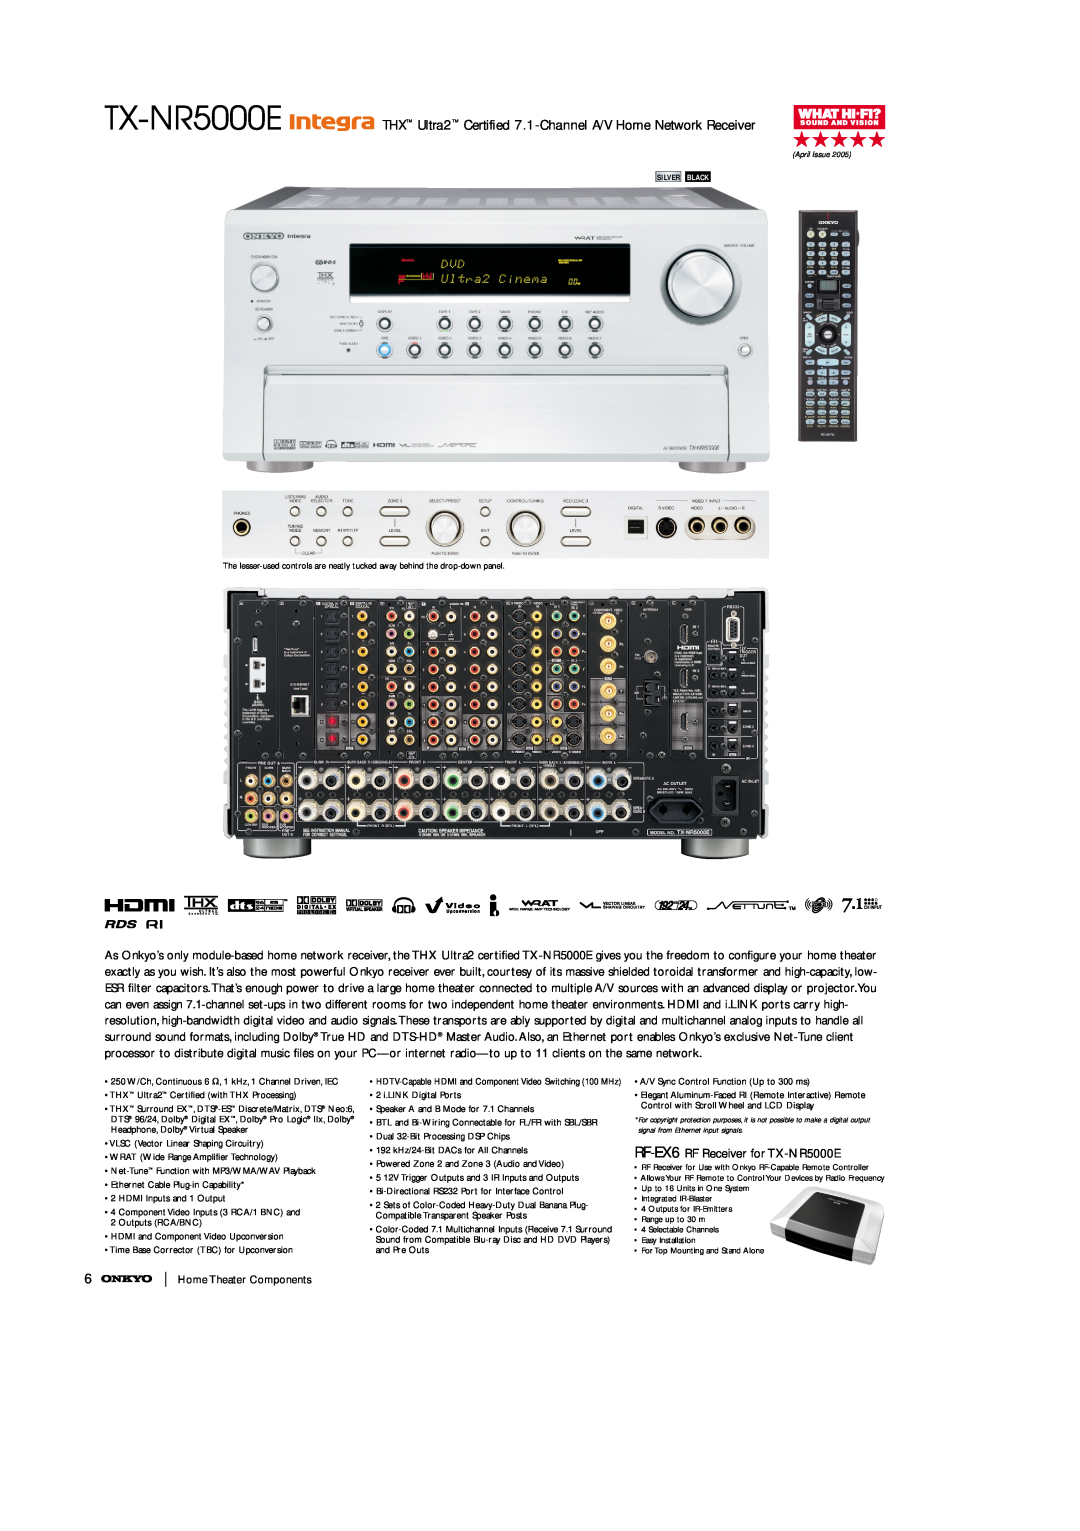 Onkyo Home Entertainment System manual RF-EX6 RF Receiver for TX-NR5000E 